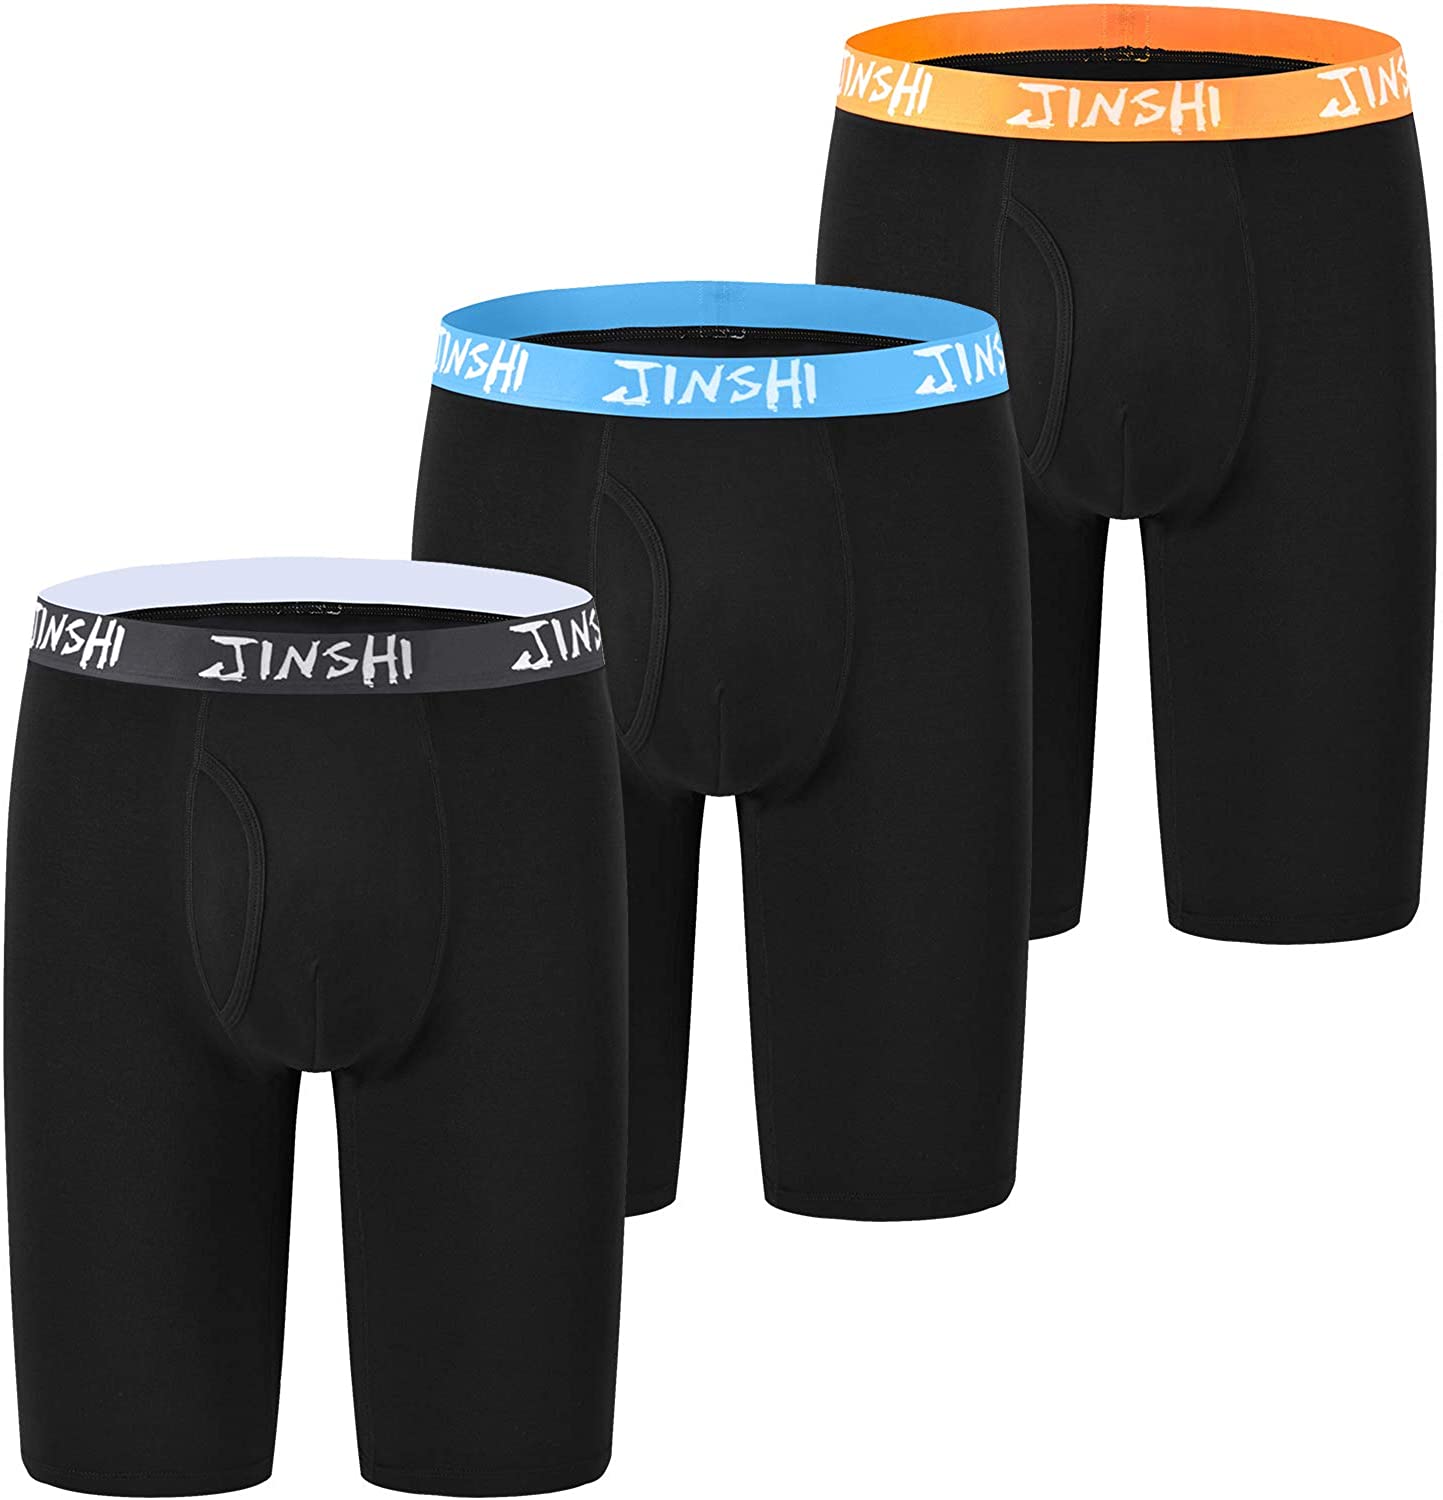 JINSHI Men's Underwear Extra Long Leg Boxer Briefs Inseam 8-9